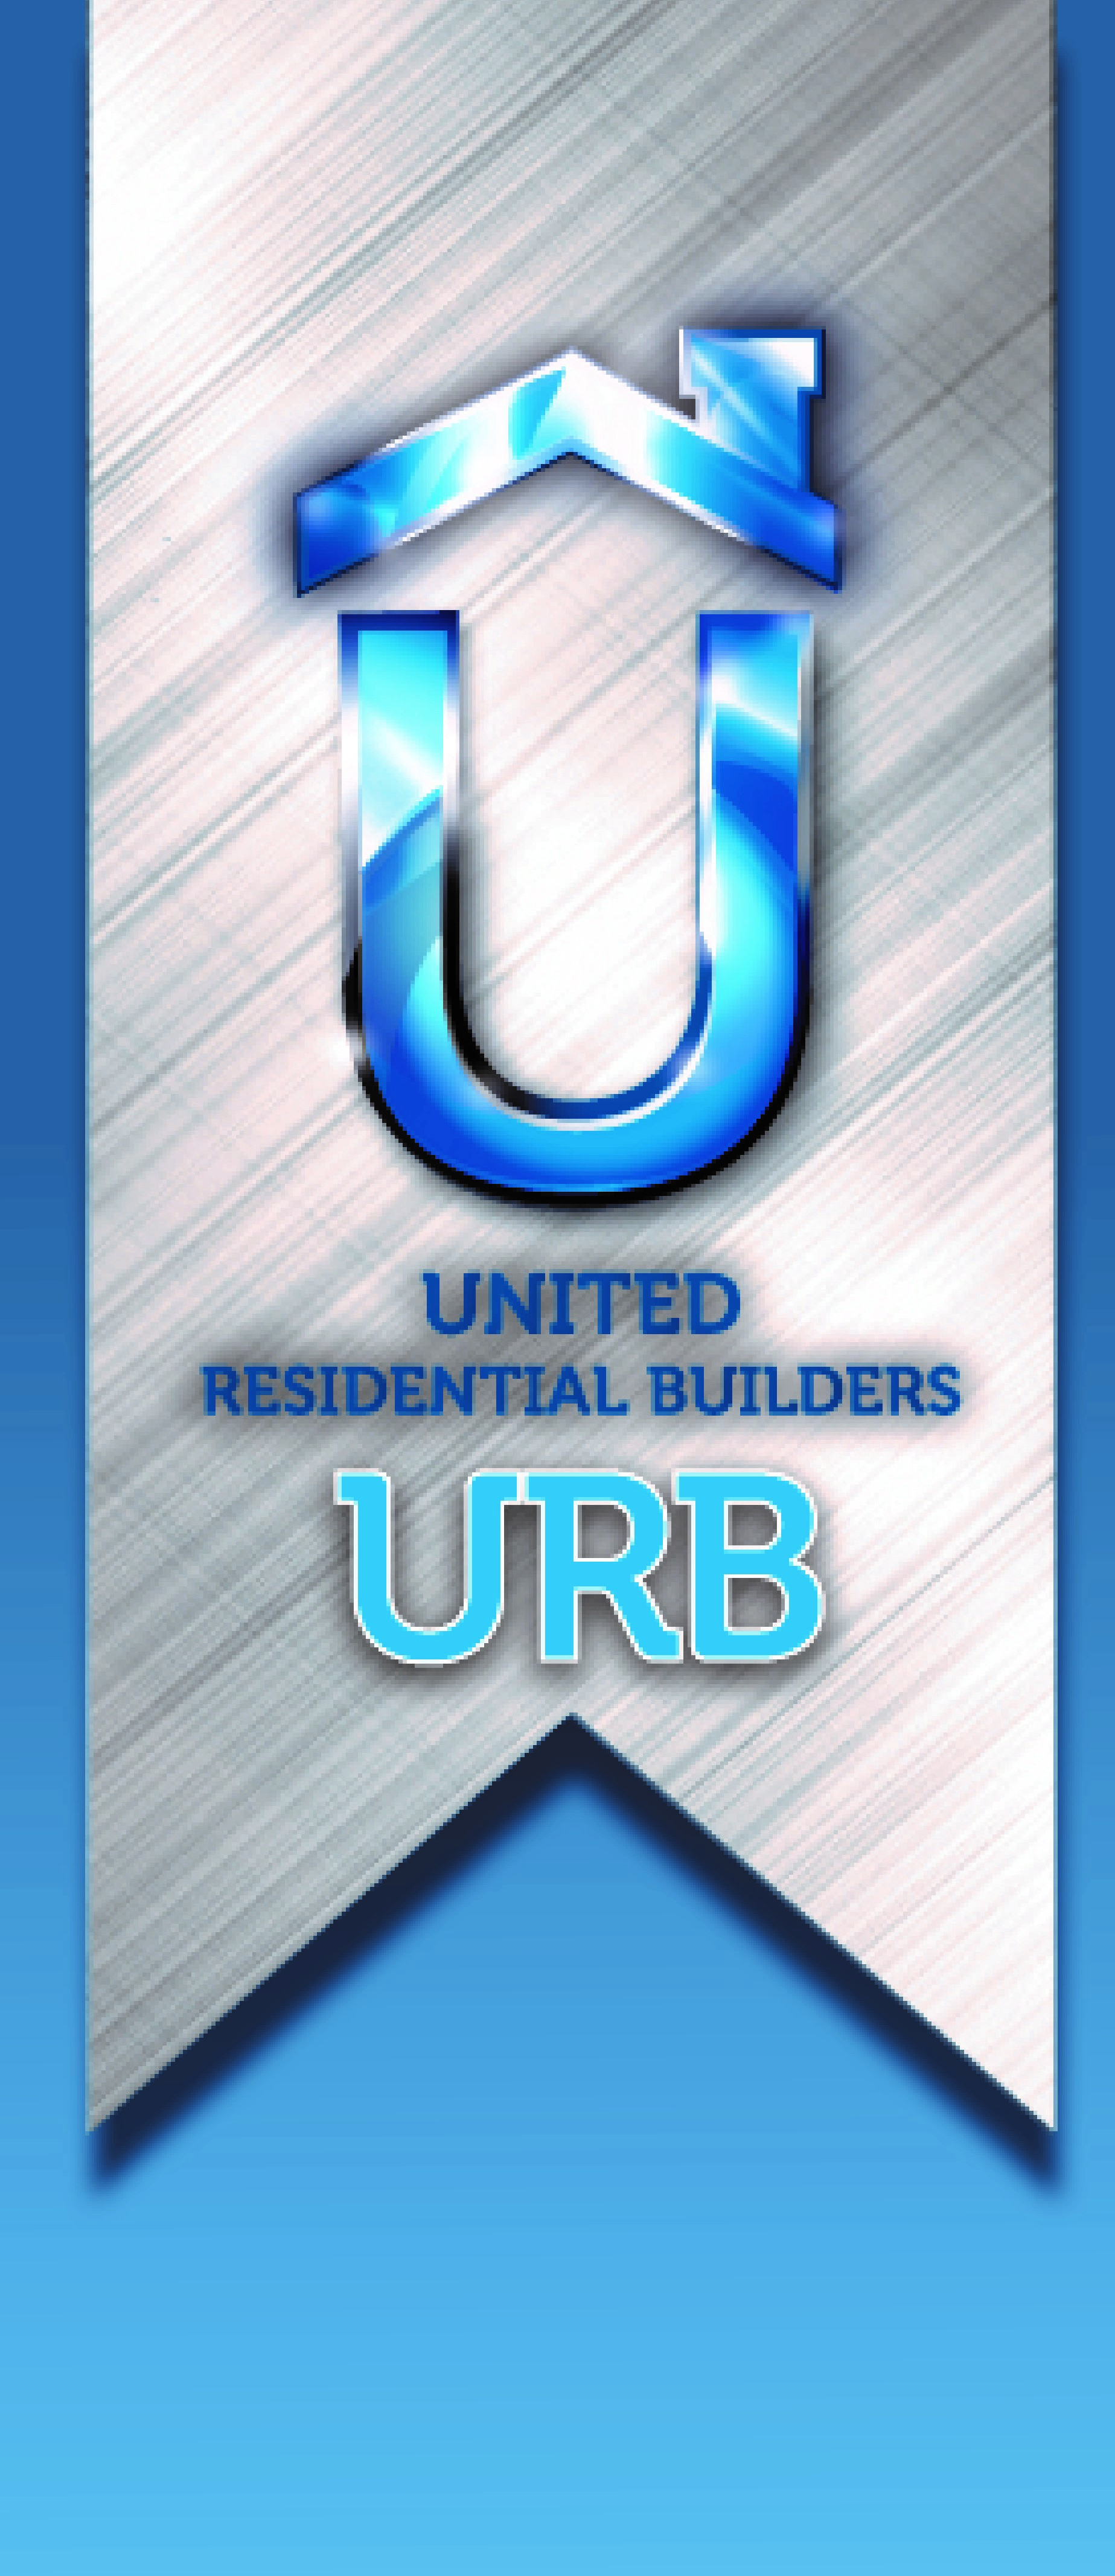 United Residential Contractors, LLC Logo